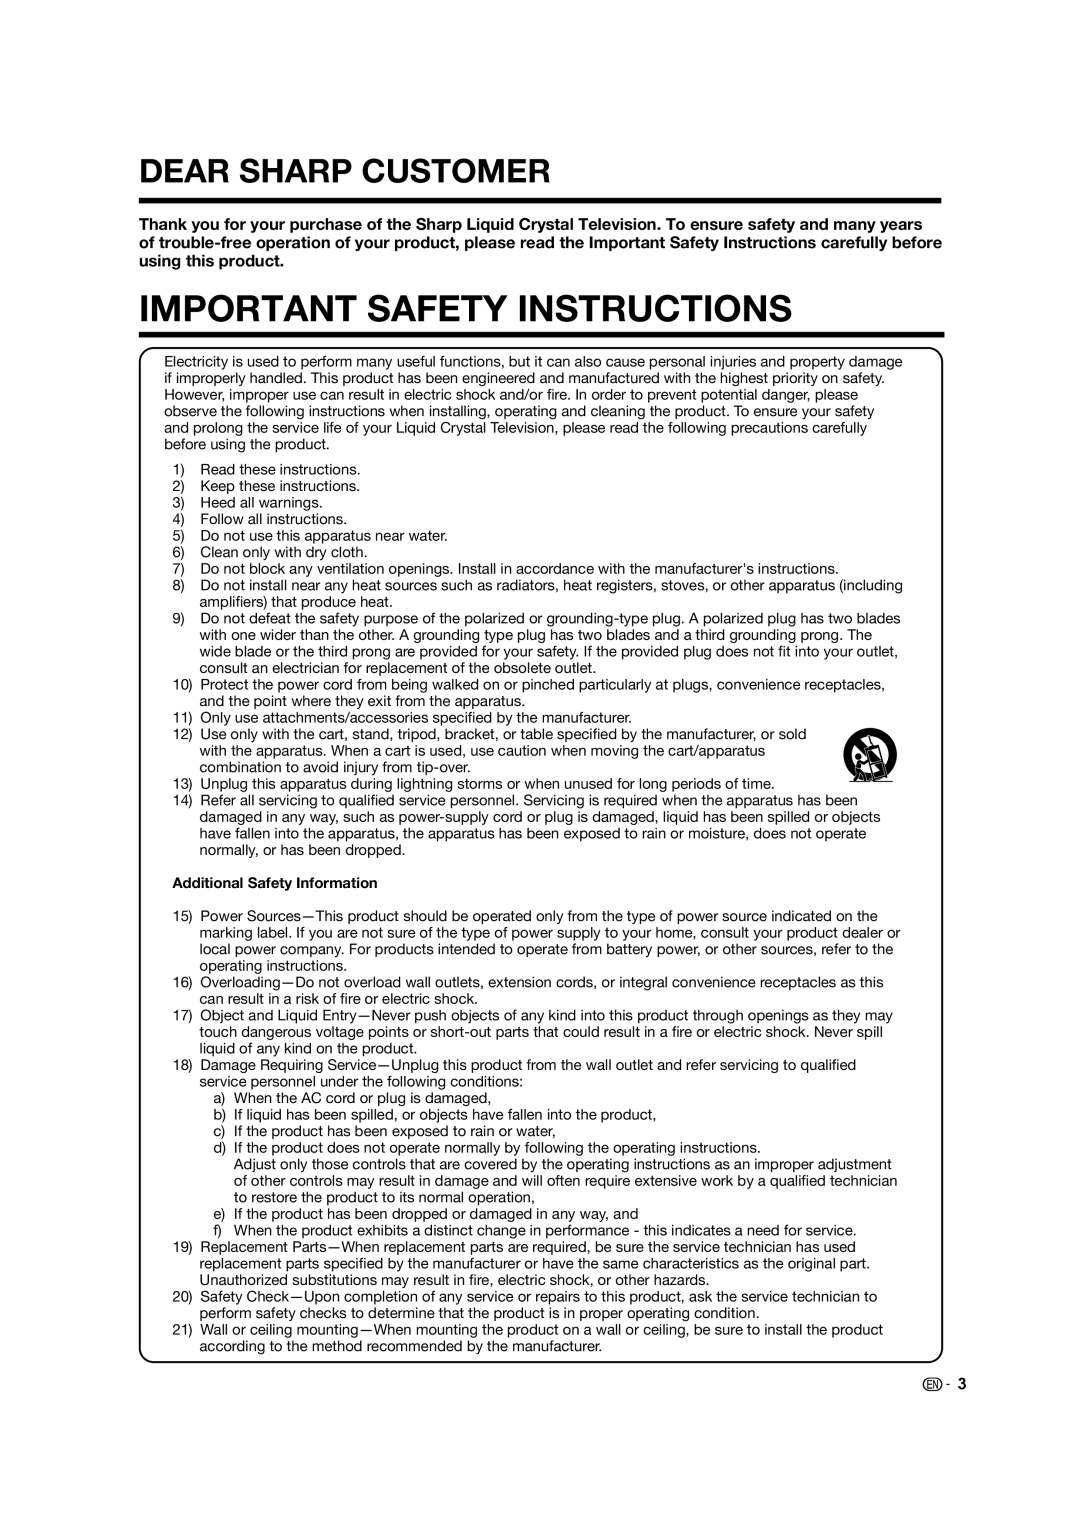 Sharp LC-70C8470U, LC-70C7450U, LC-60C7450U, LC-60C8470U operation manual Important Safety Instructions, Dear Sharp Customer 